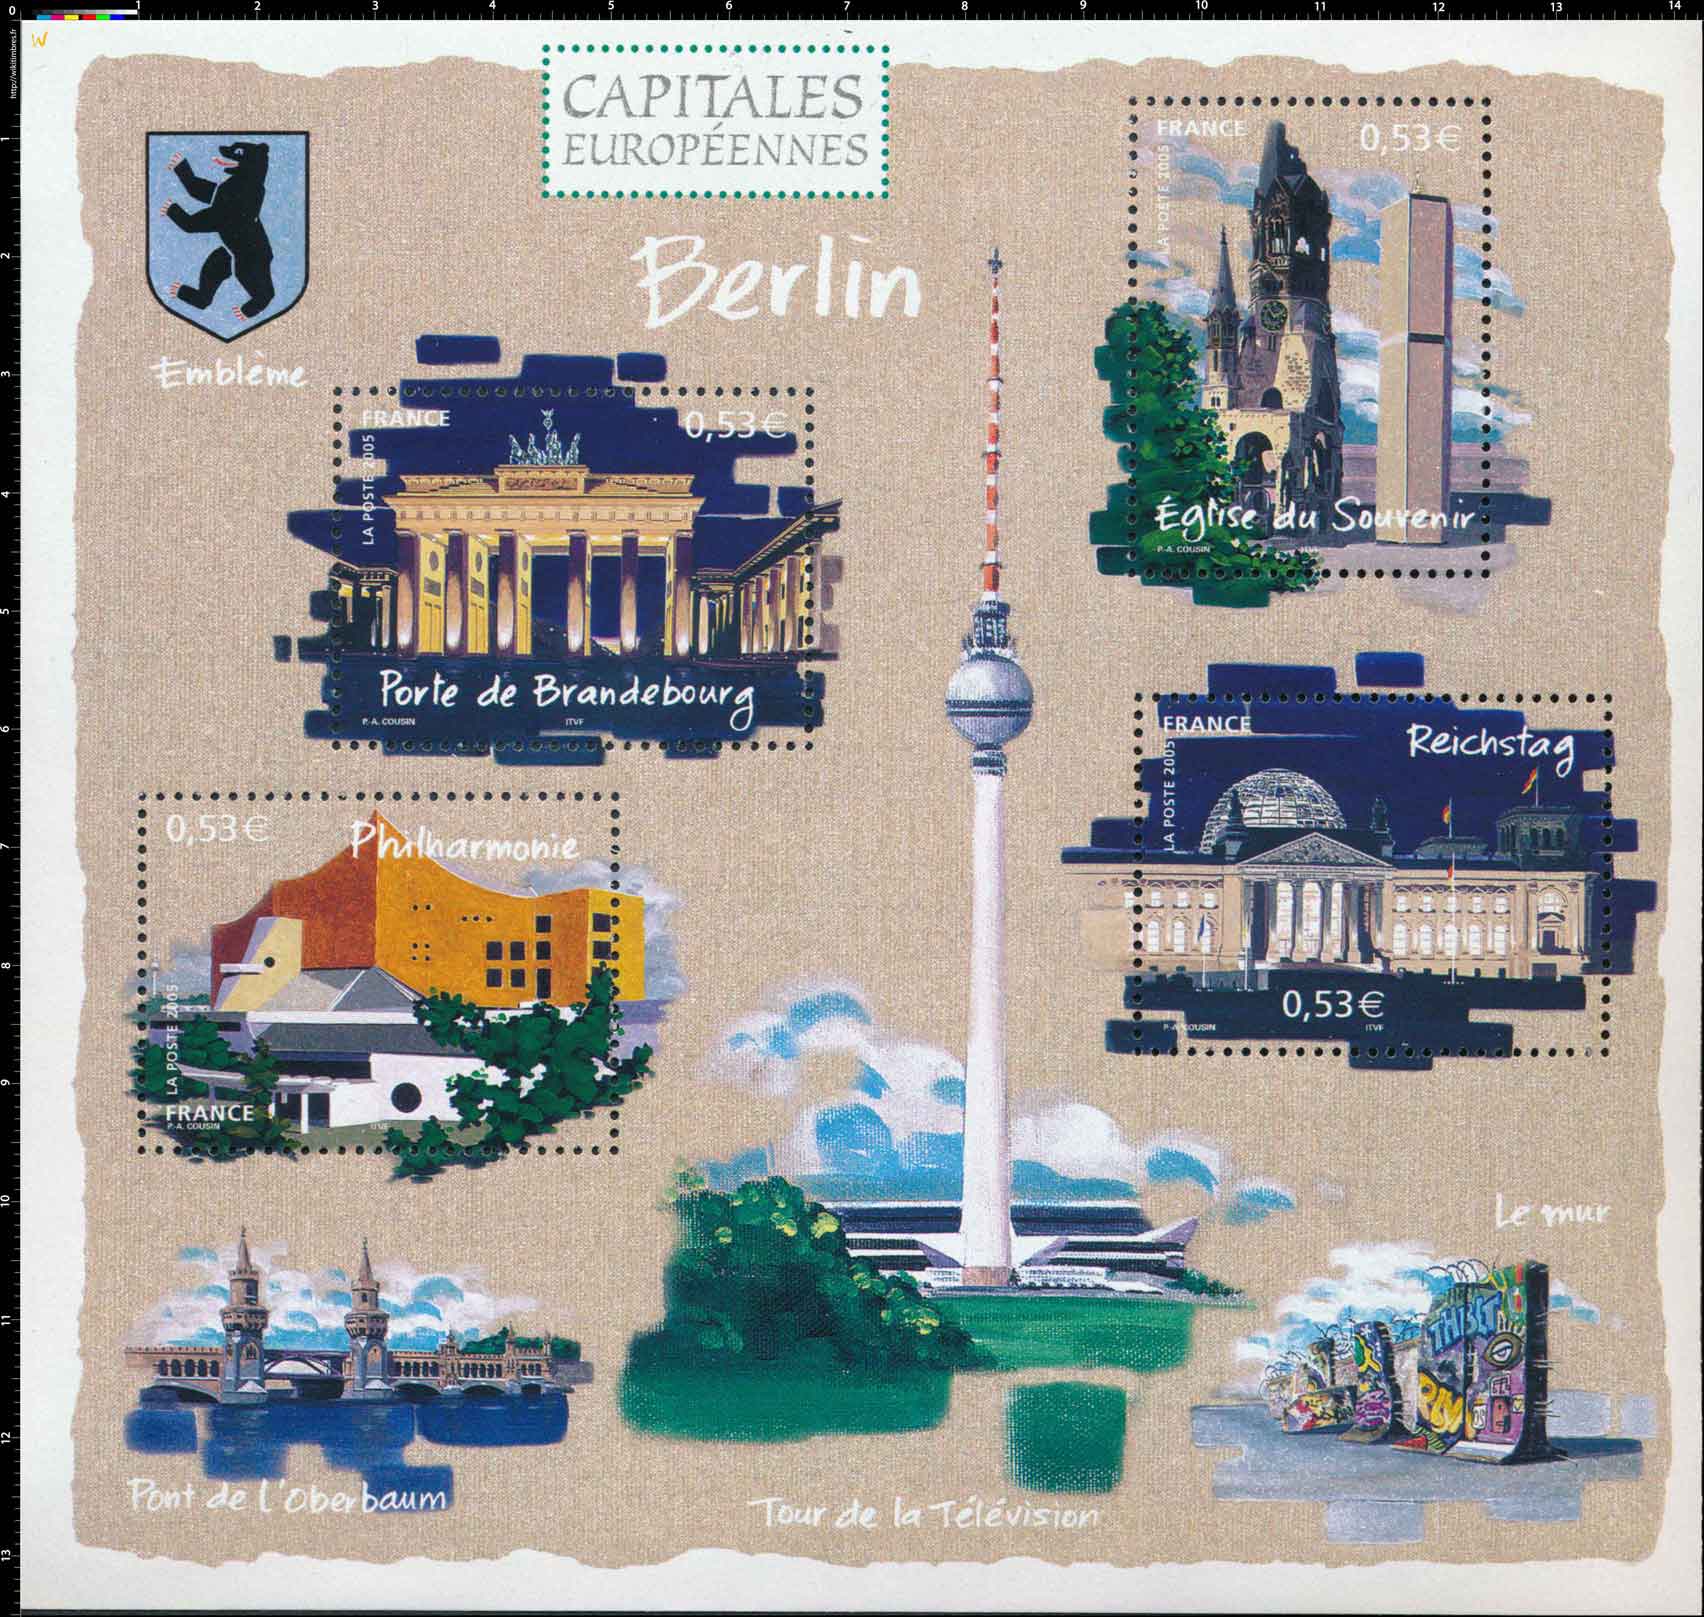 2005 CAPITALES EUROPÉENNES Berlin